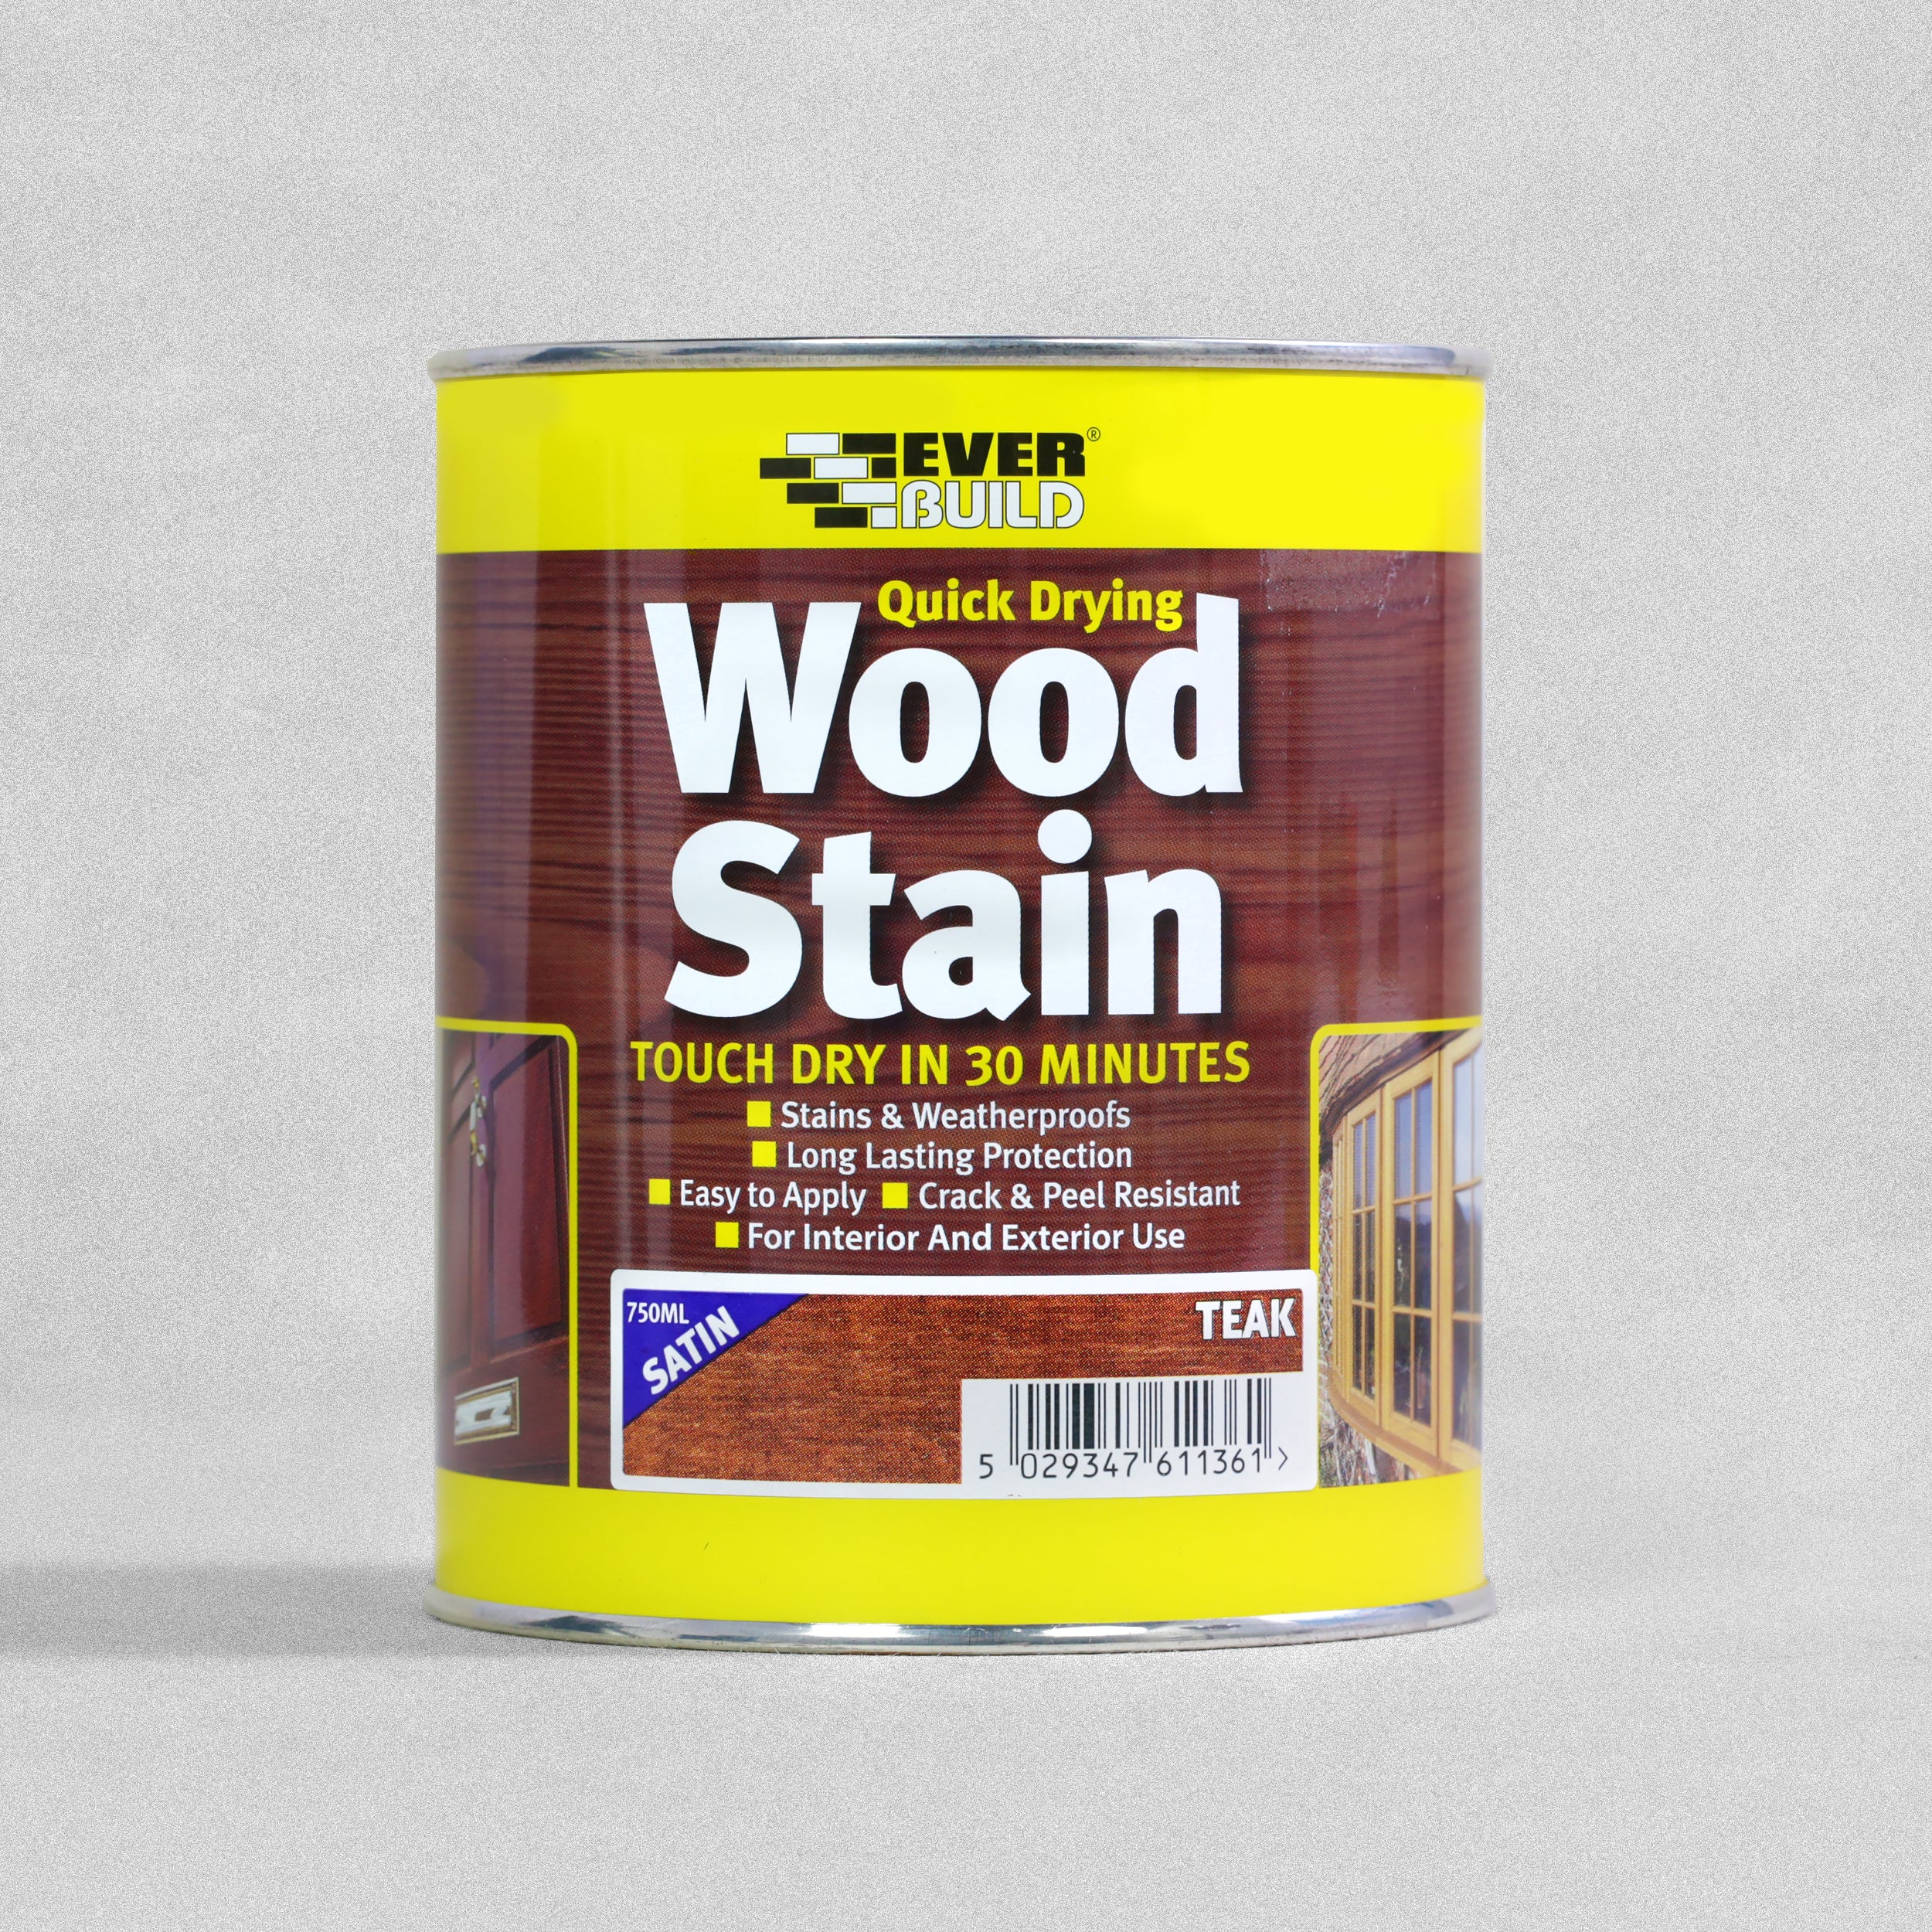 EverBuild Quick Drying Satin Wood Stain 750ml - Teak